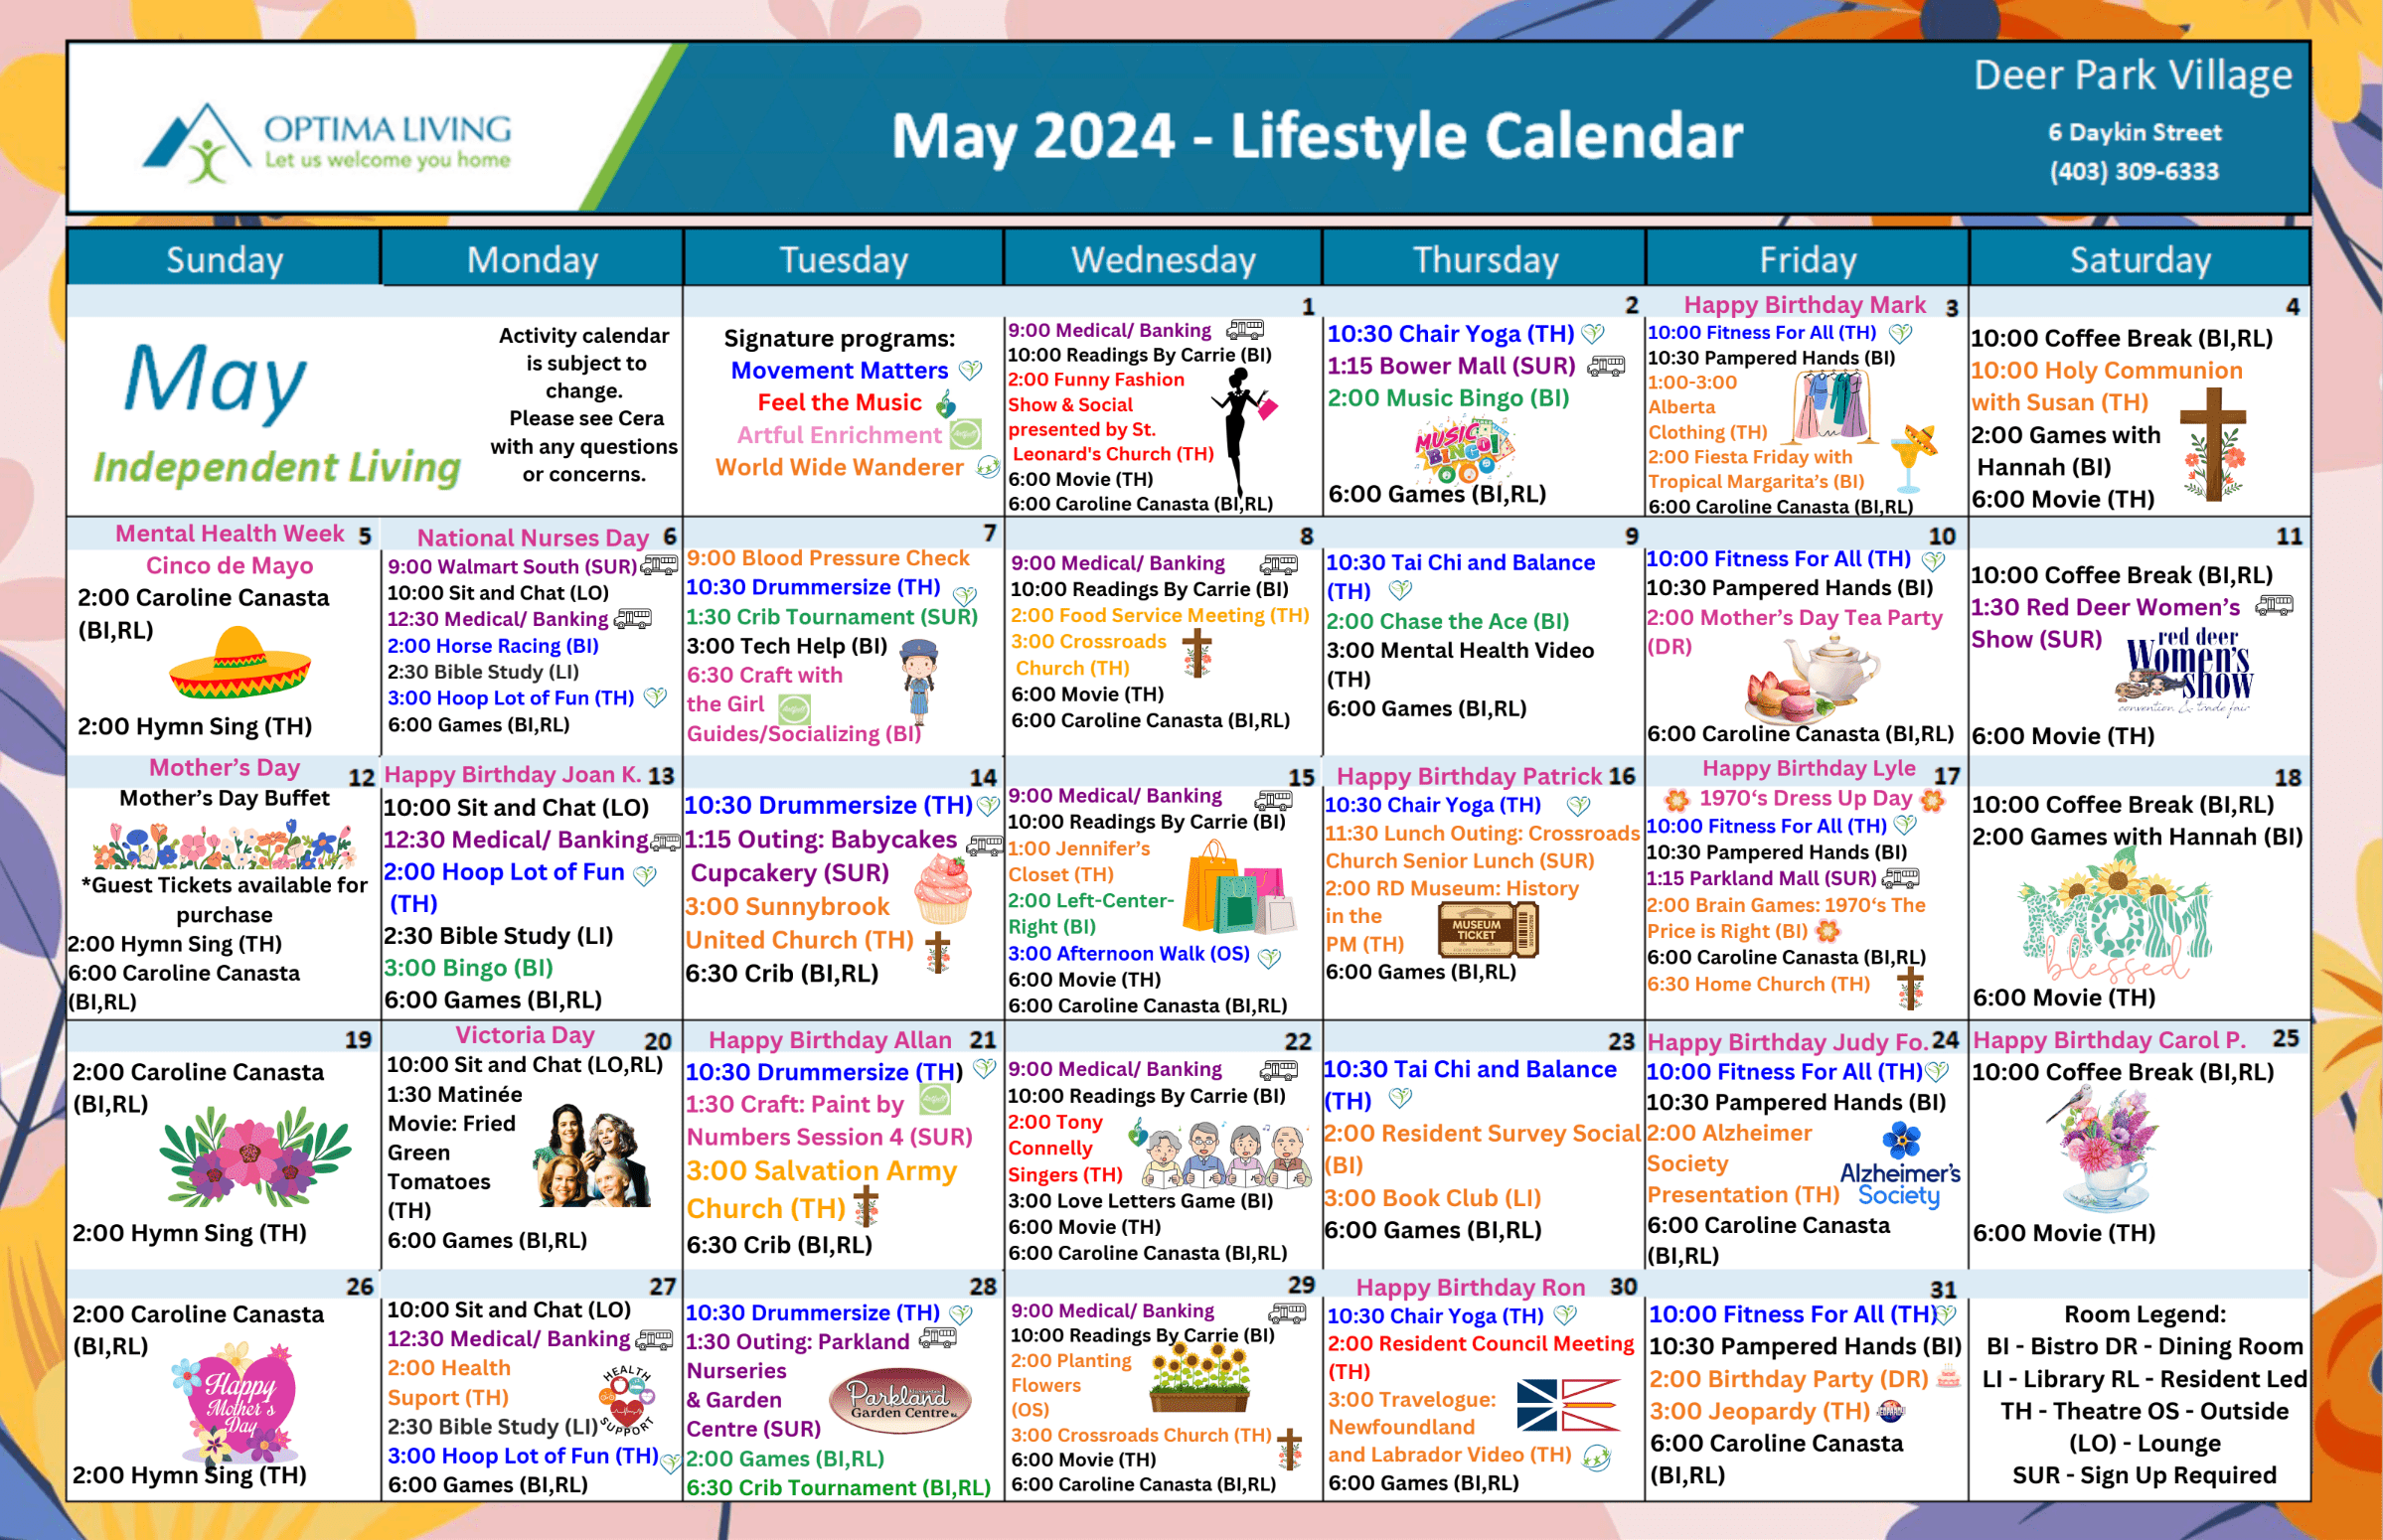 Deer Park Village May 2024 event calendar